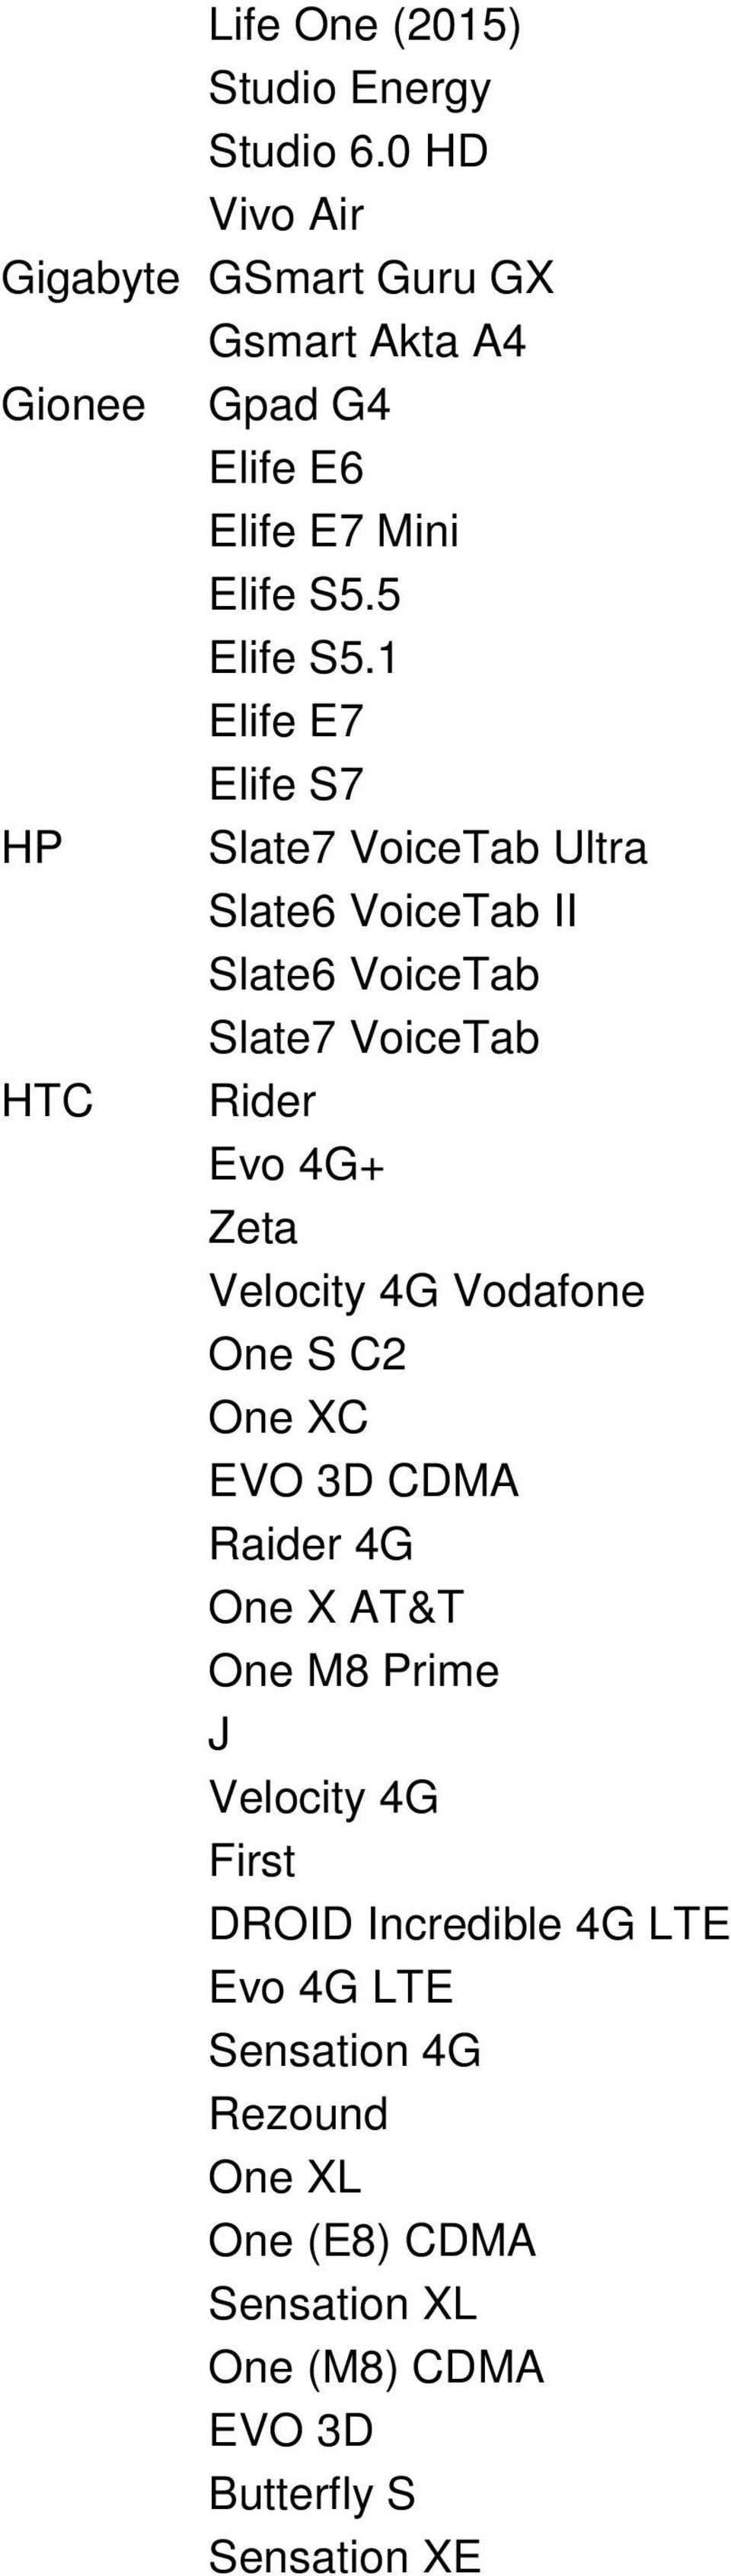 1 Elife E7 Elife S7 HP Slate7 VoiceTab Ultra Slate6 VoiceTab II Slate6 VoiceTab Slate7 VoiceTab HTC Rider Evo 4G+ Zeta